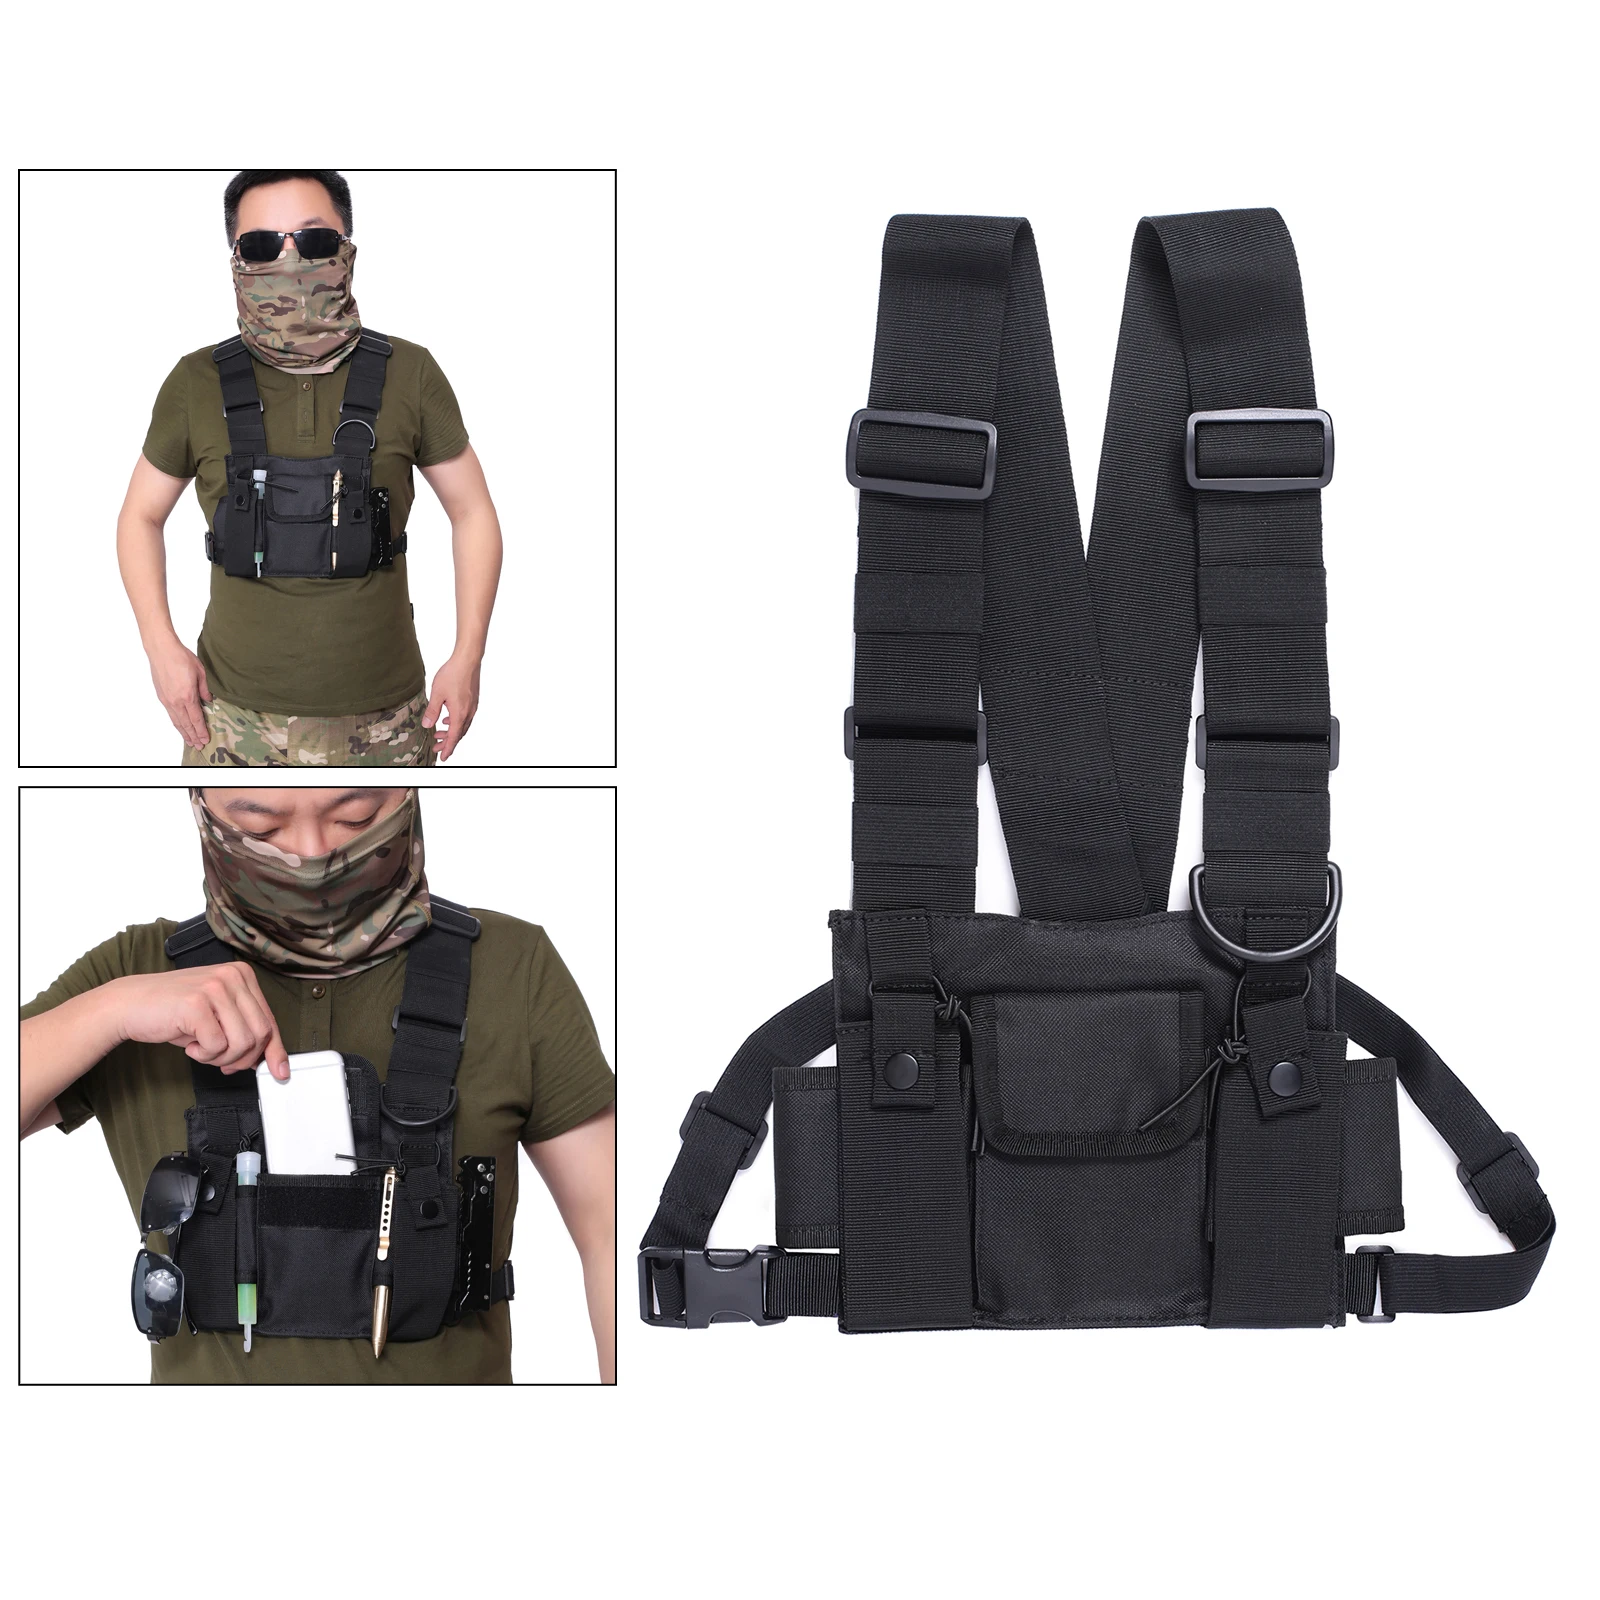 Chest Vest Bag for Men Women Fashion Chest Rig Bag Pack Harness Lightweight Bags for Men Women Running Exercise Hiking Camping